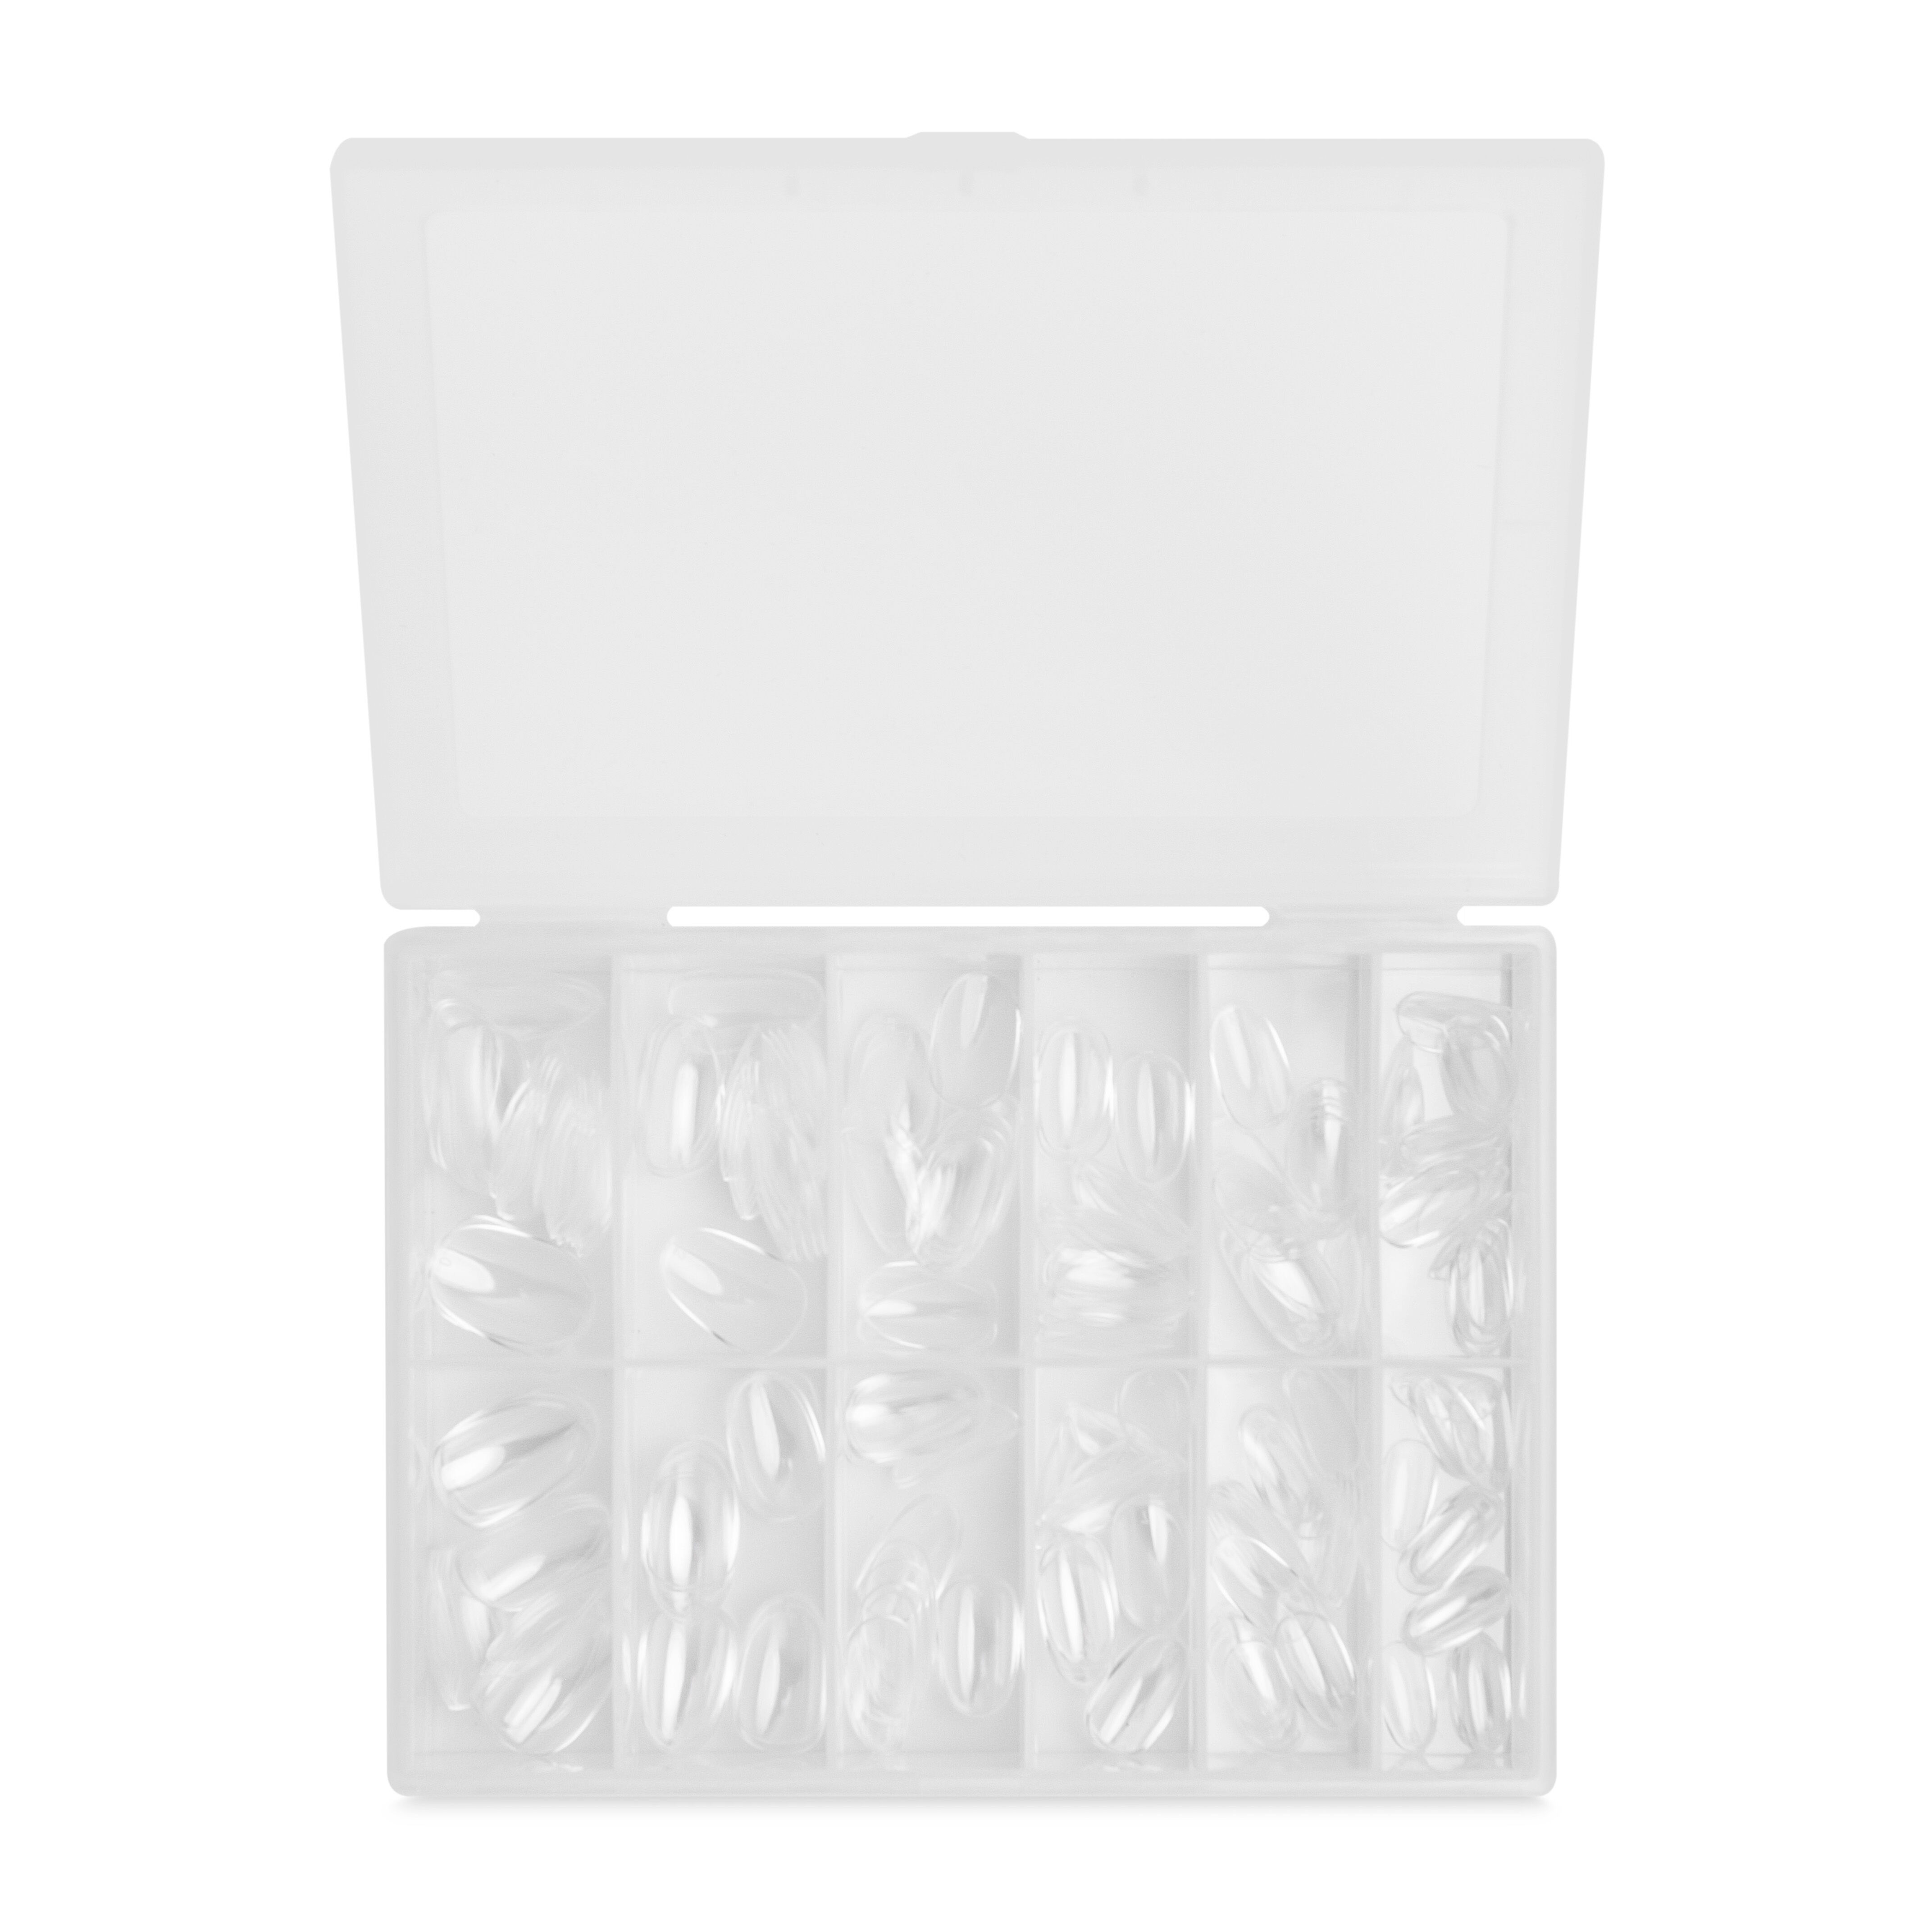 цена Искусственные ногти а13 натуральные Mani King Instant Nails Full Cover Tips, 240 шт/1 упаковка